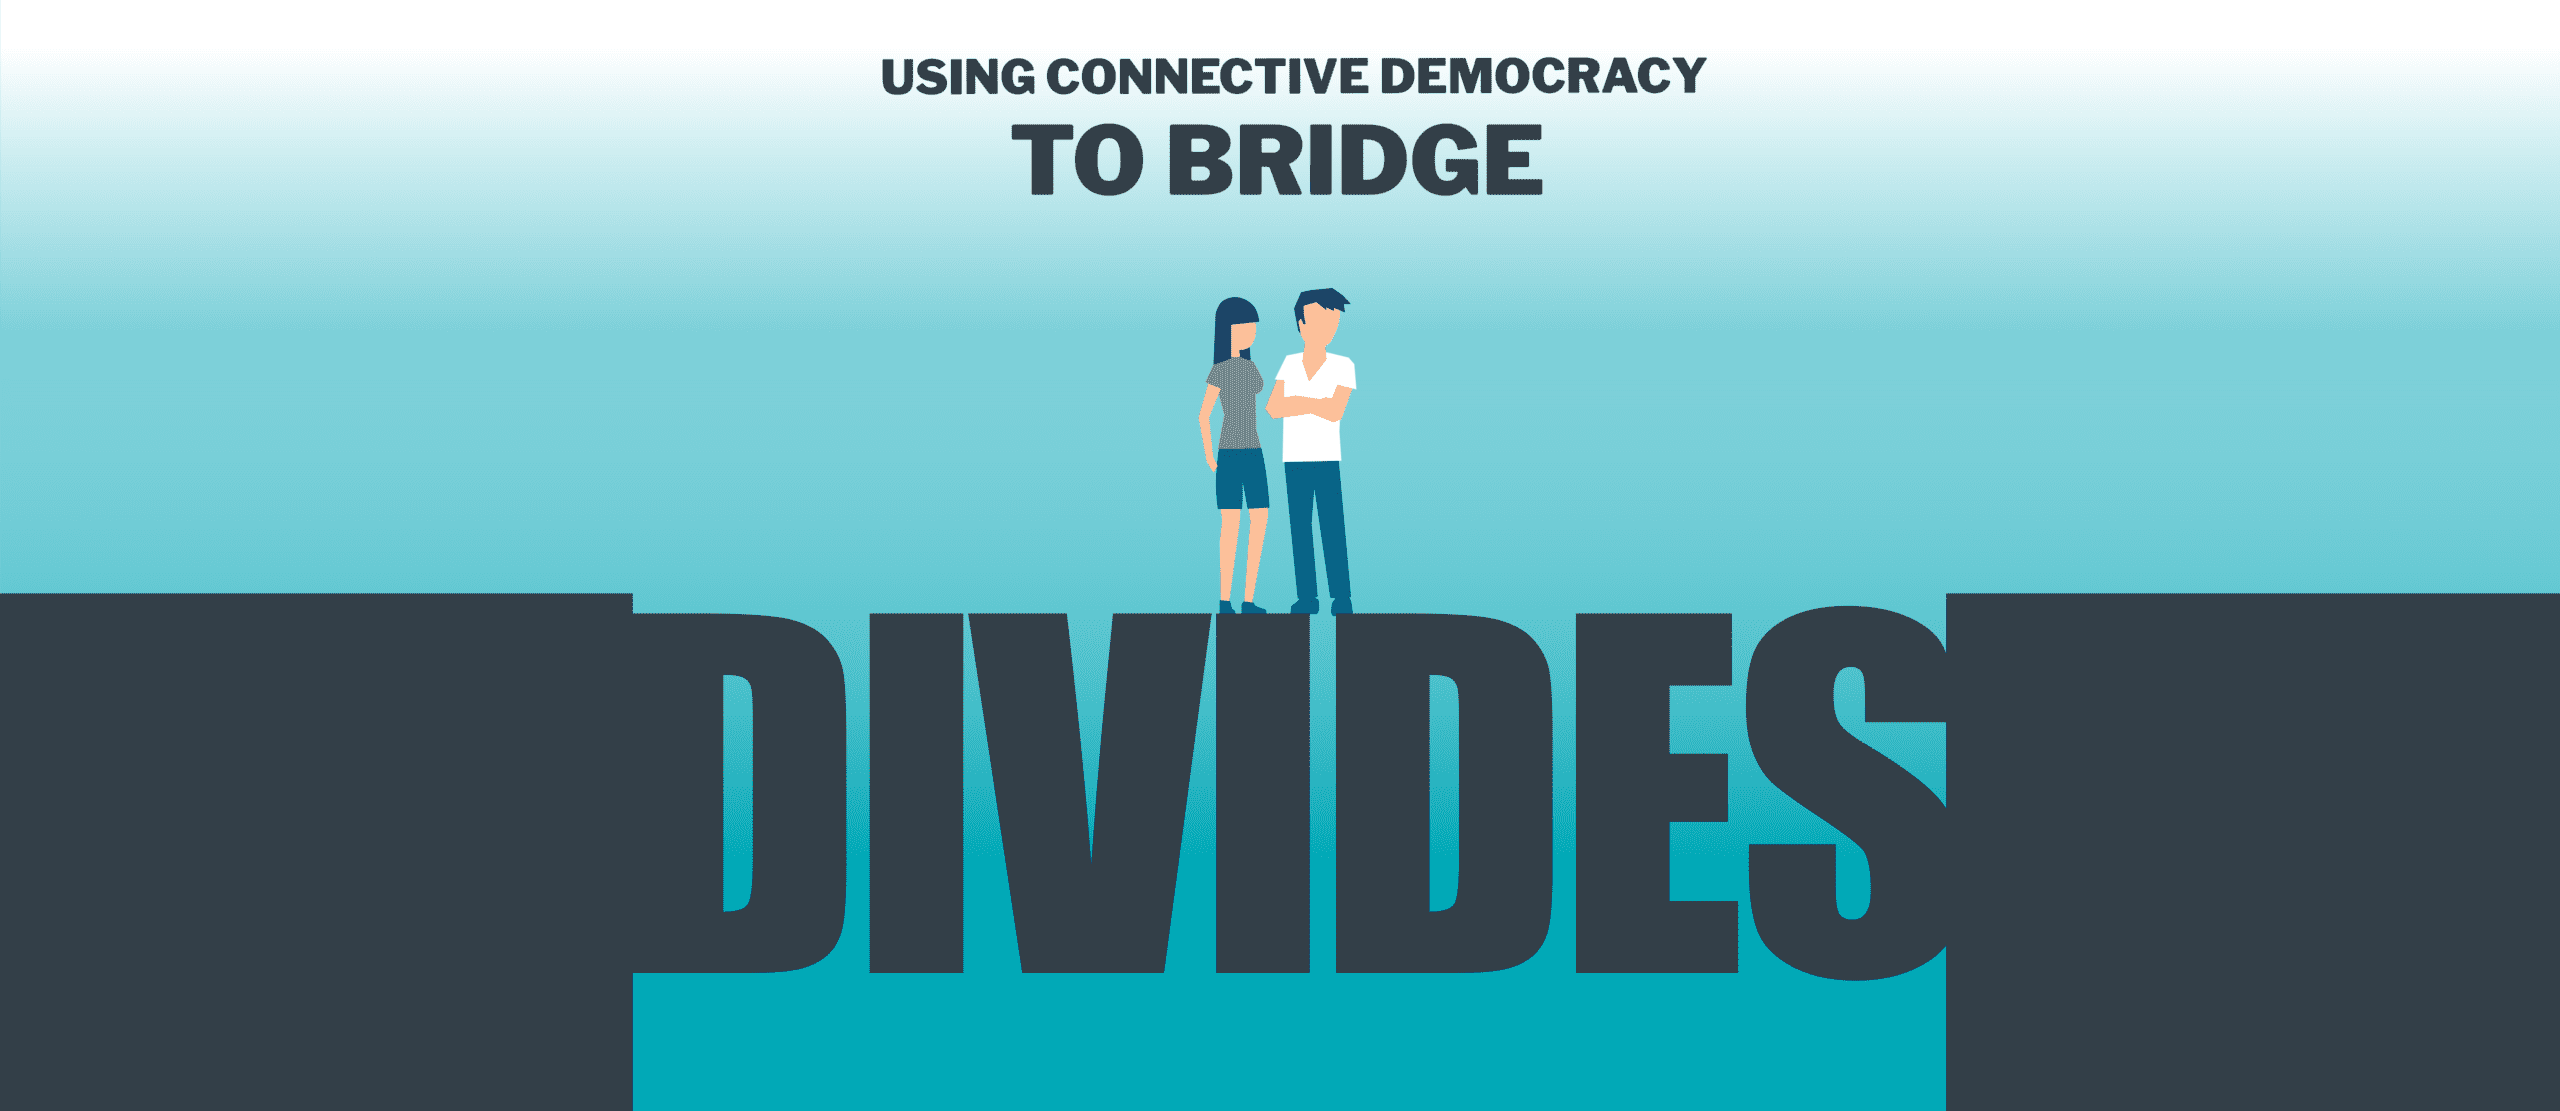 connective democracy